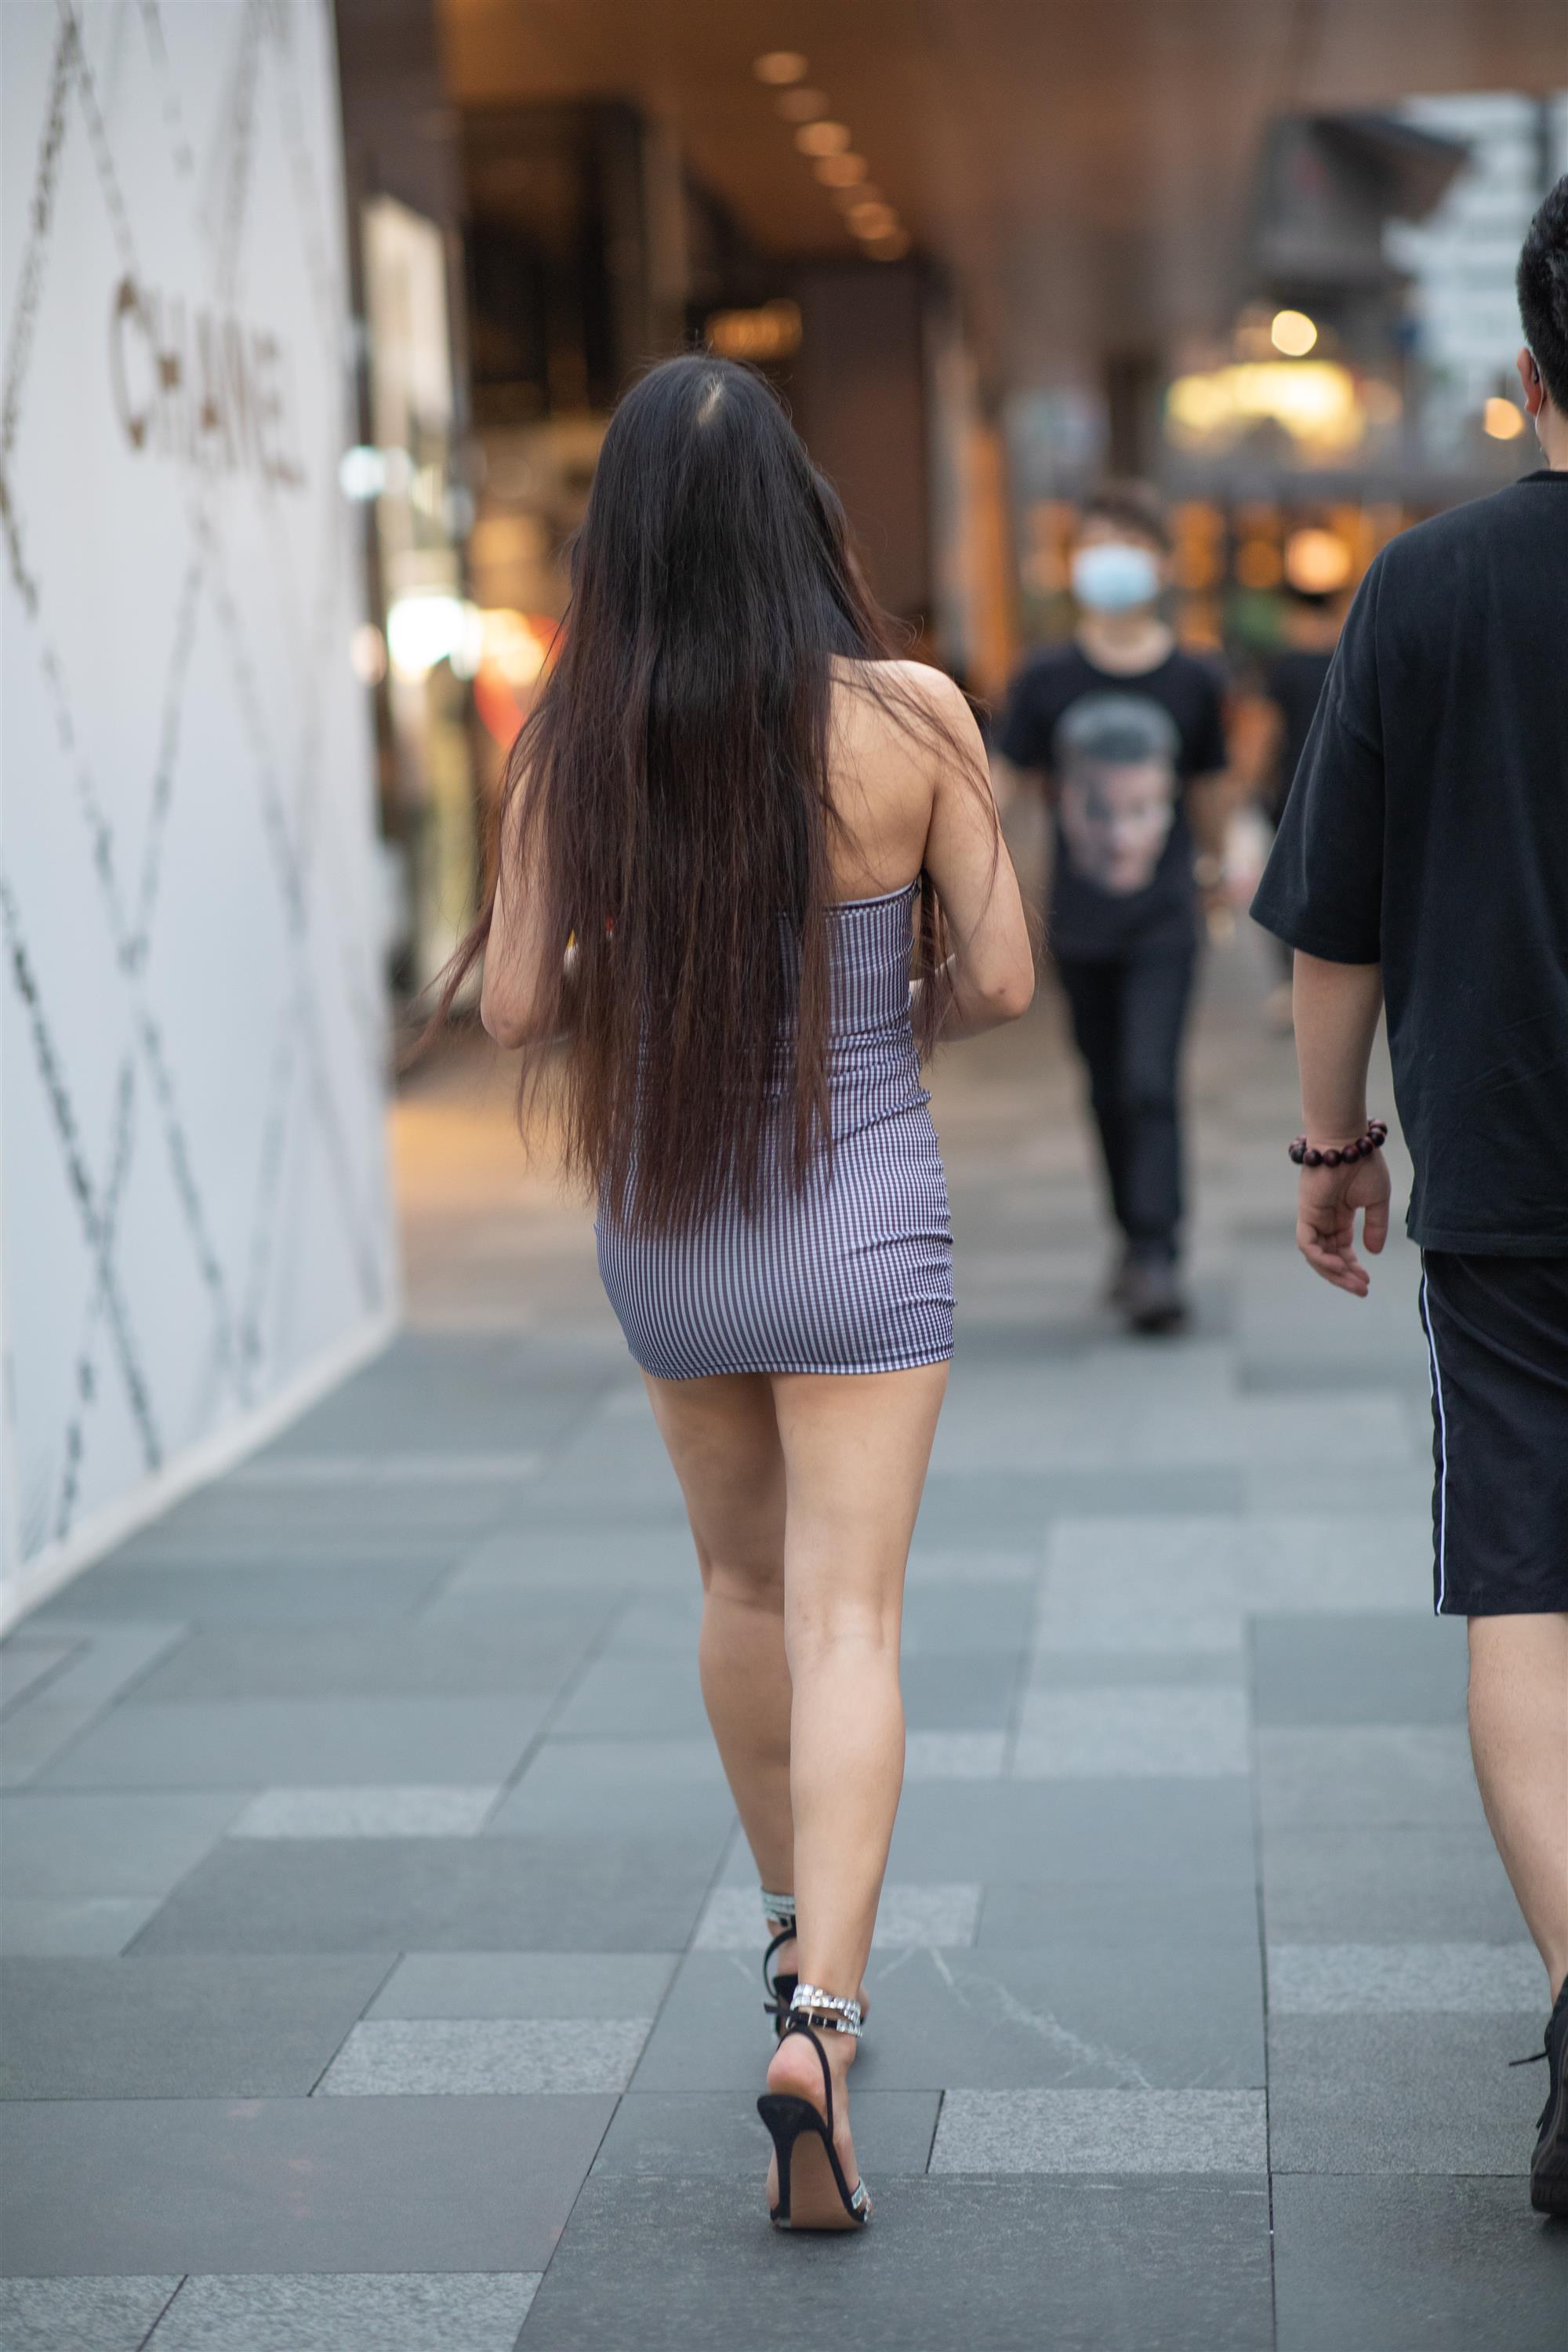 Street Long hair beauty - 2.jpg